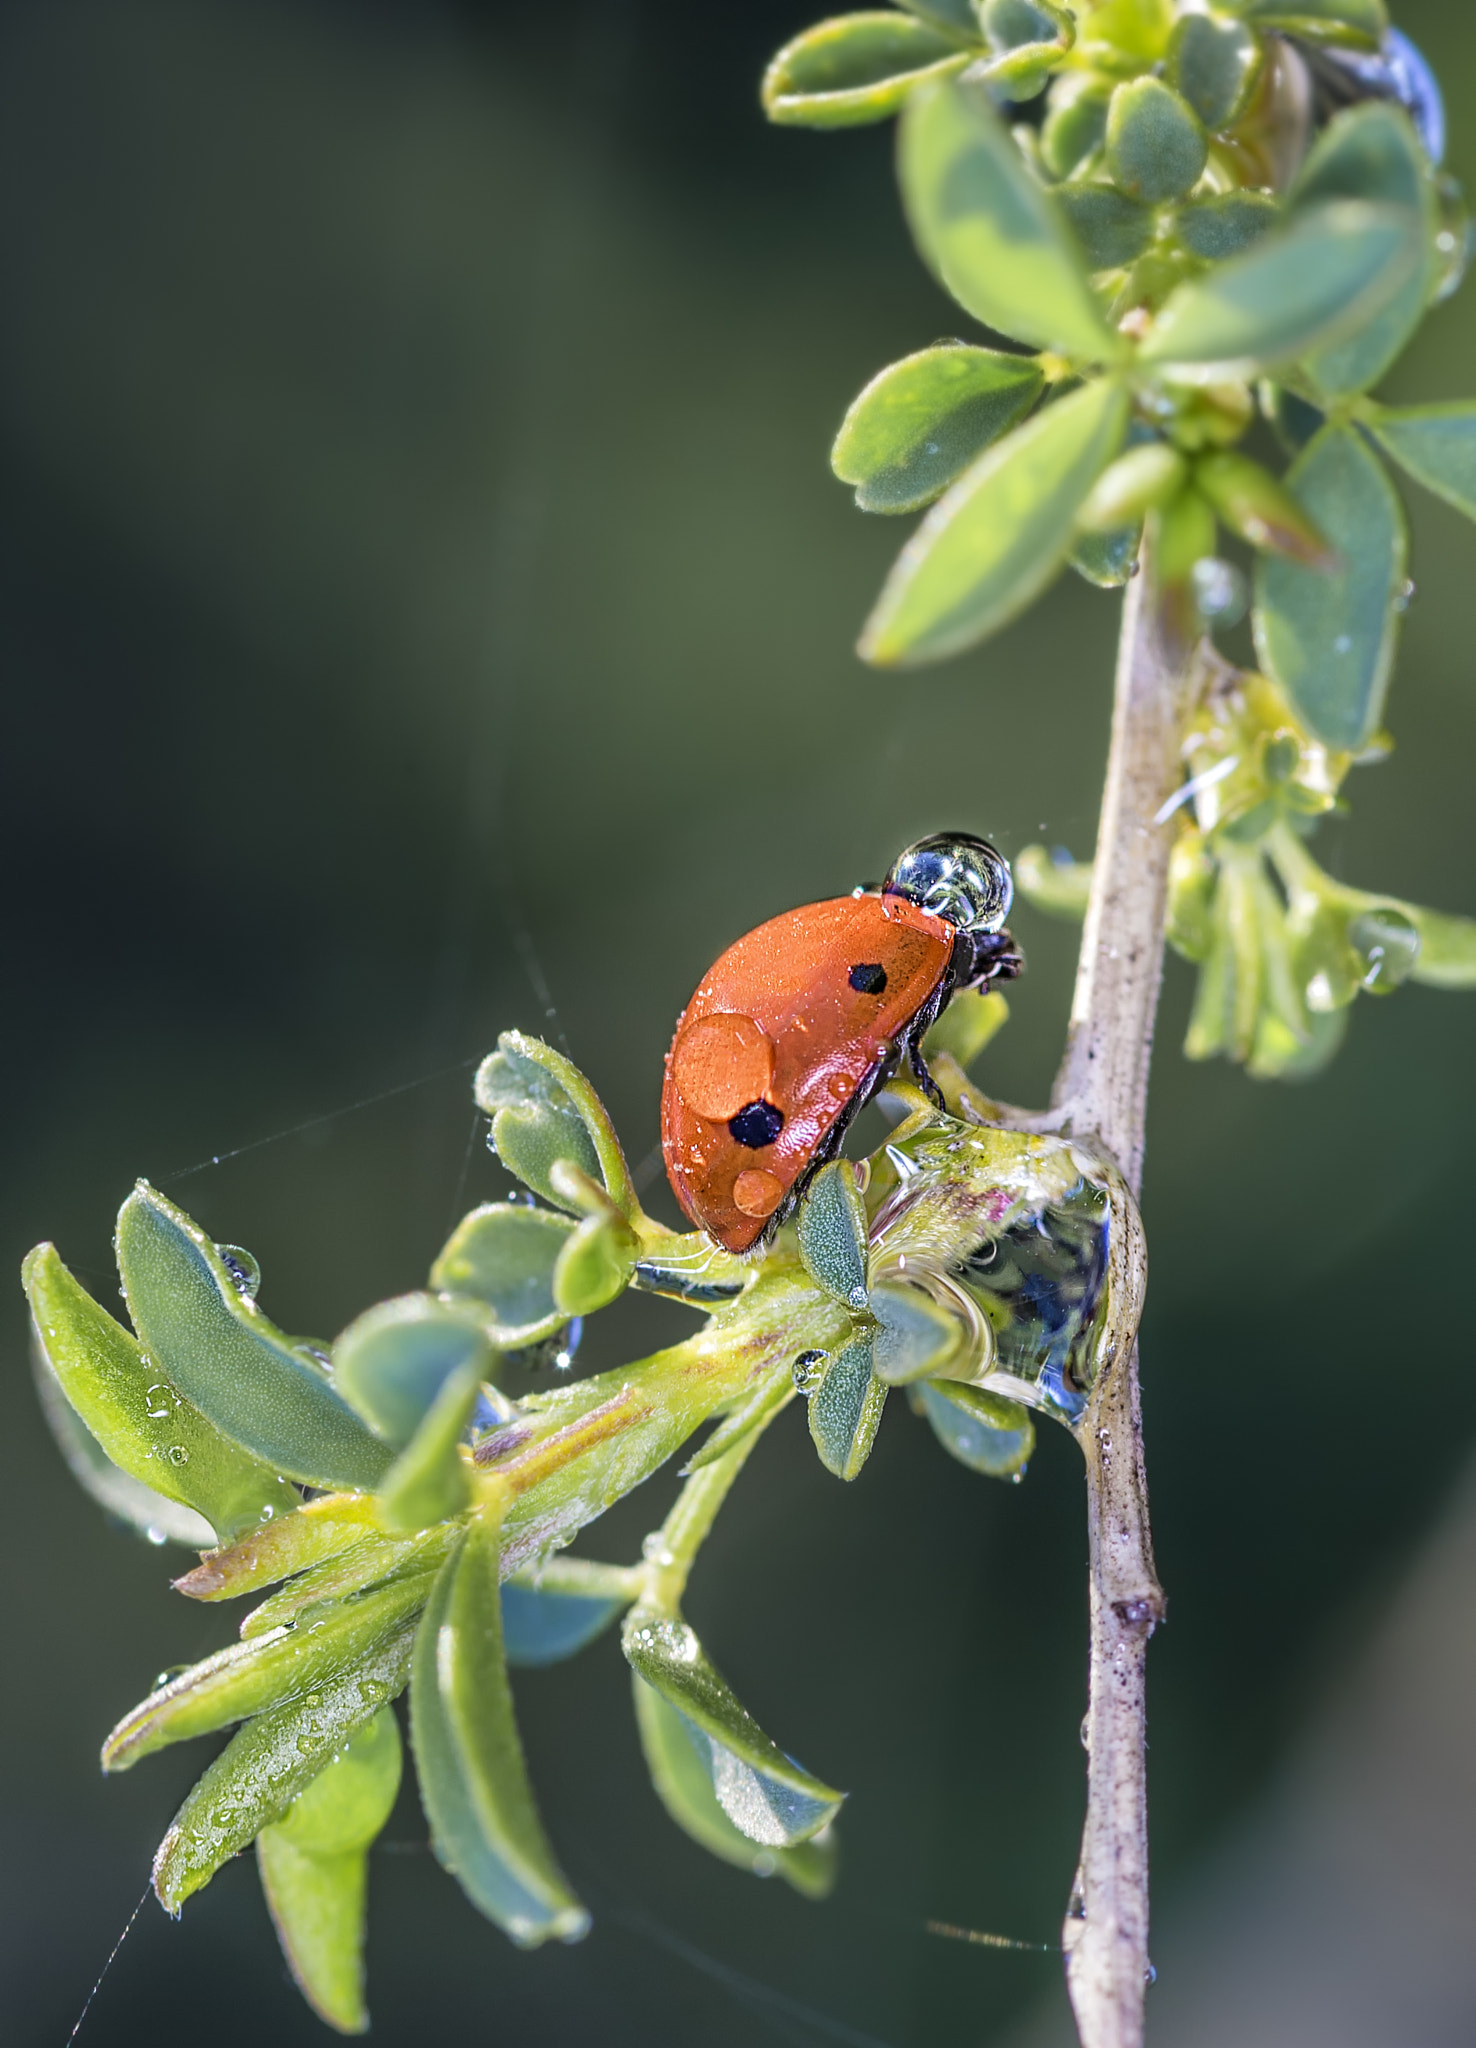 Ladybug with water drops